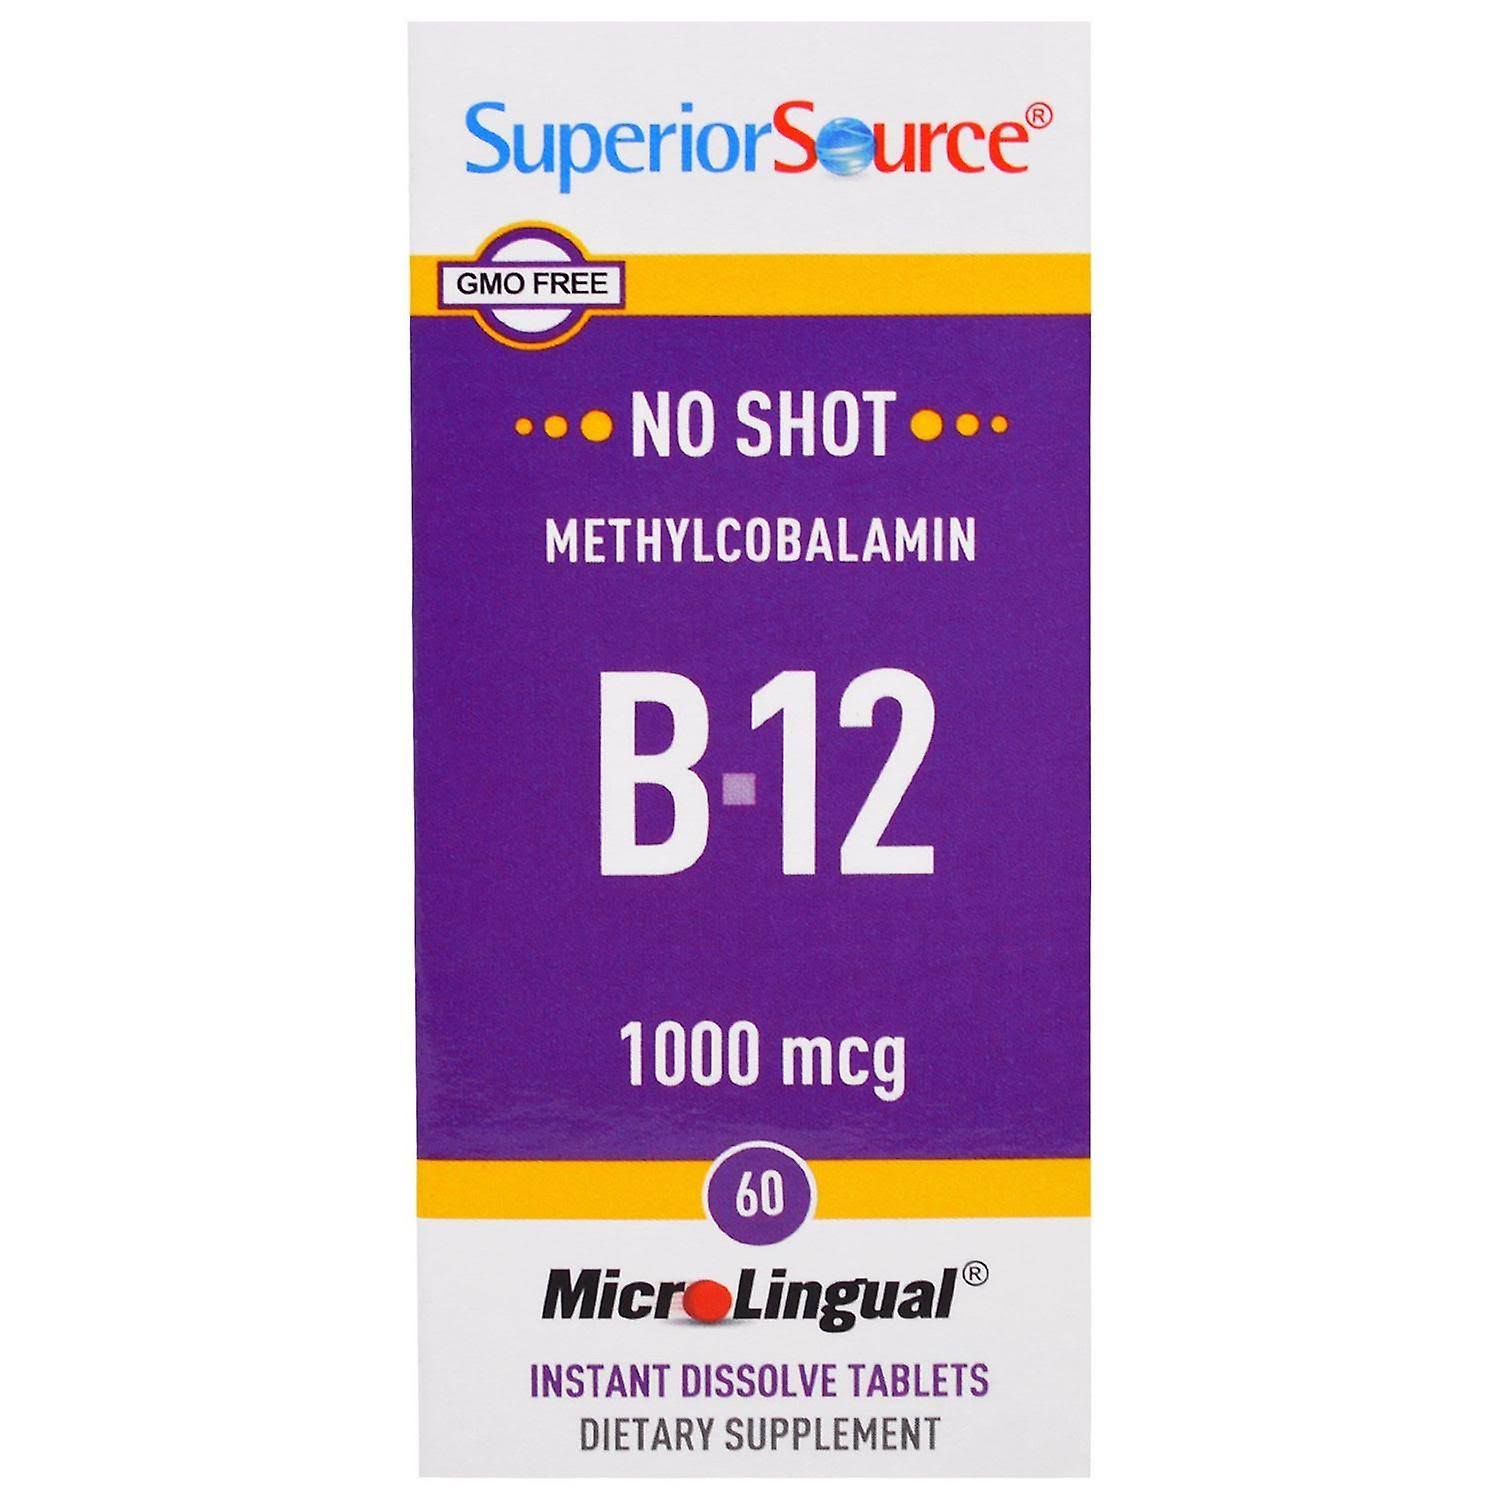 Superior Source Methylcobalamin B-12 - 1000mcg, 60 Instant Dissolve Tablets